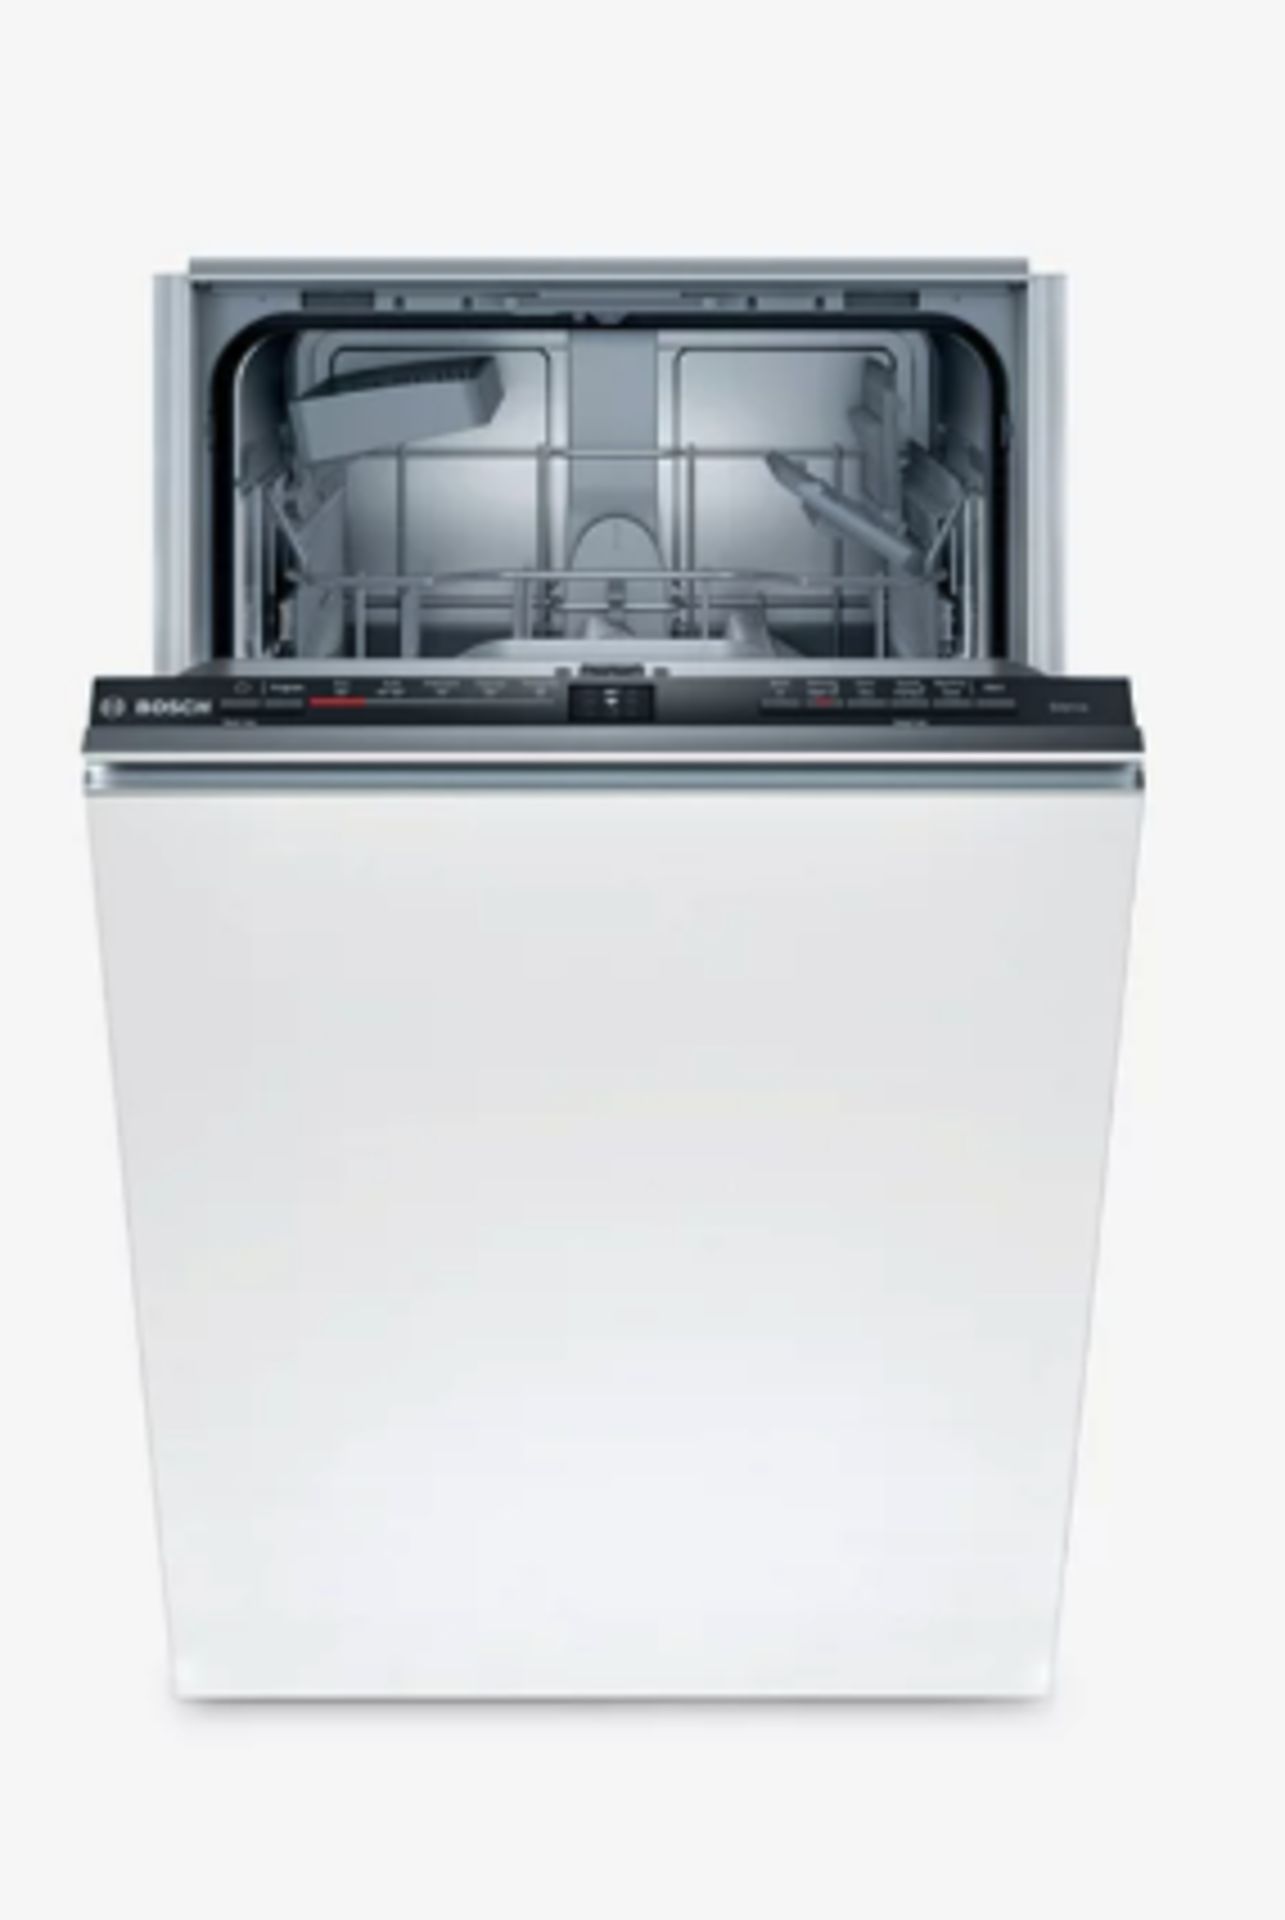 Item Description - Bosch Serie 2 SPV2HKX39G Fully Integrated Slimline Dishwasher - Stock Numb...